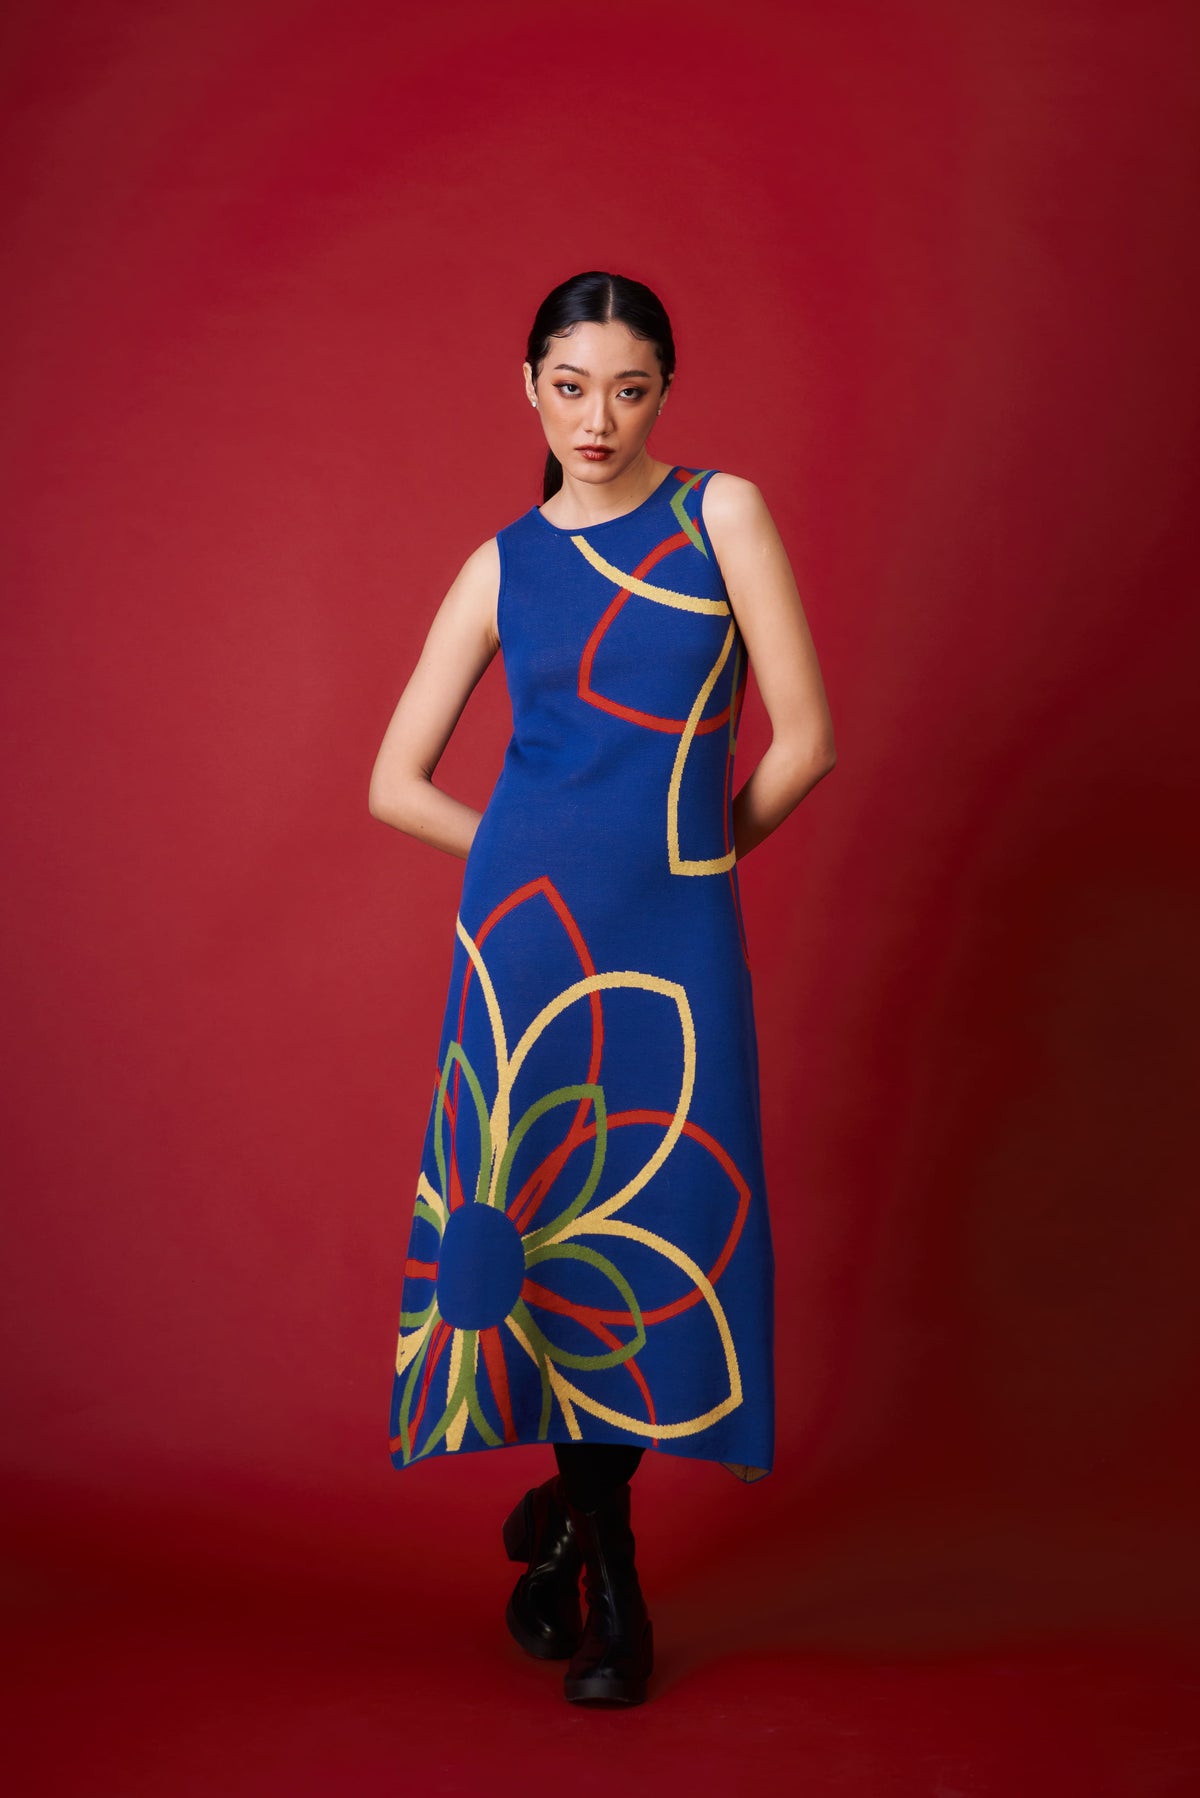 SAAMU KR Flower Knit Dress